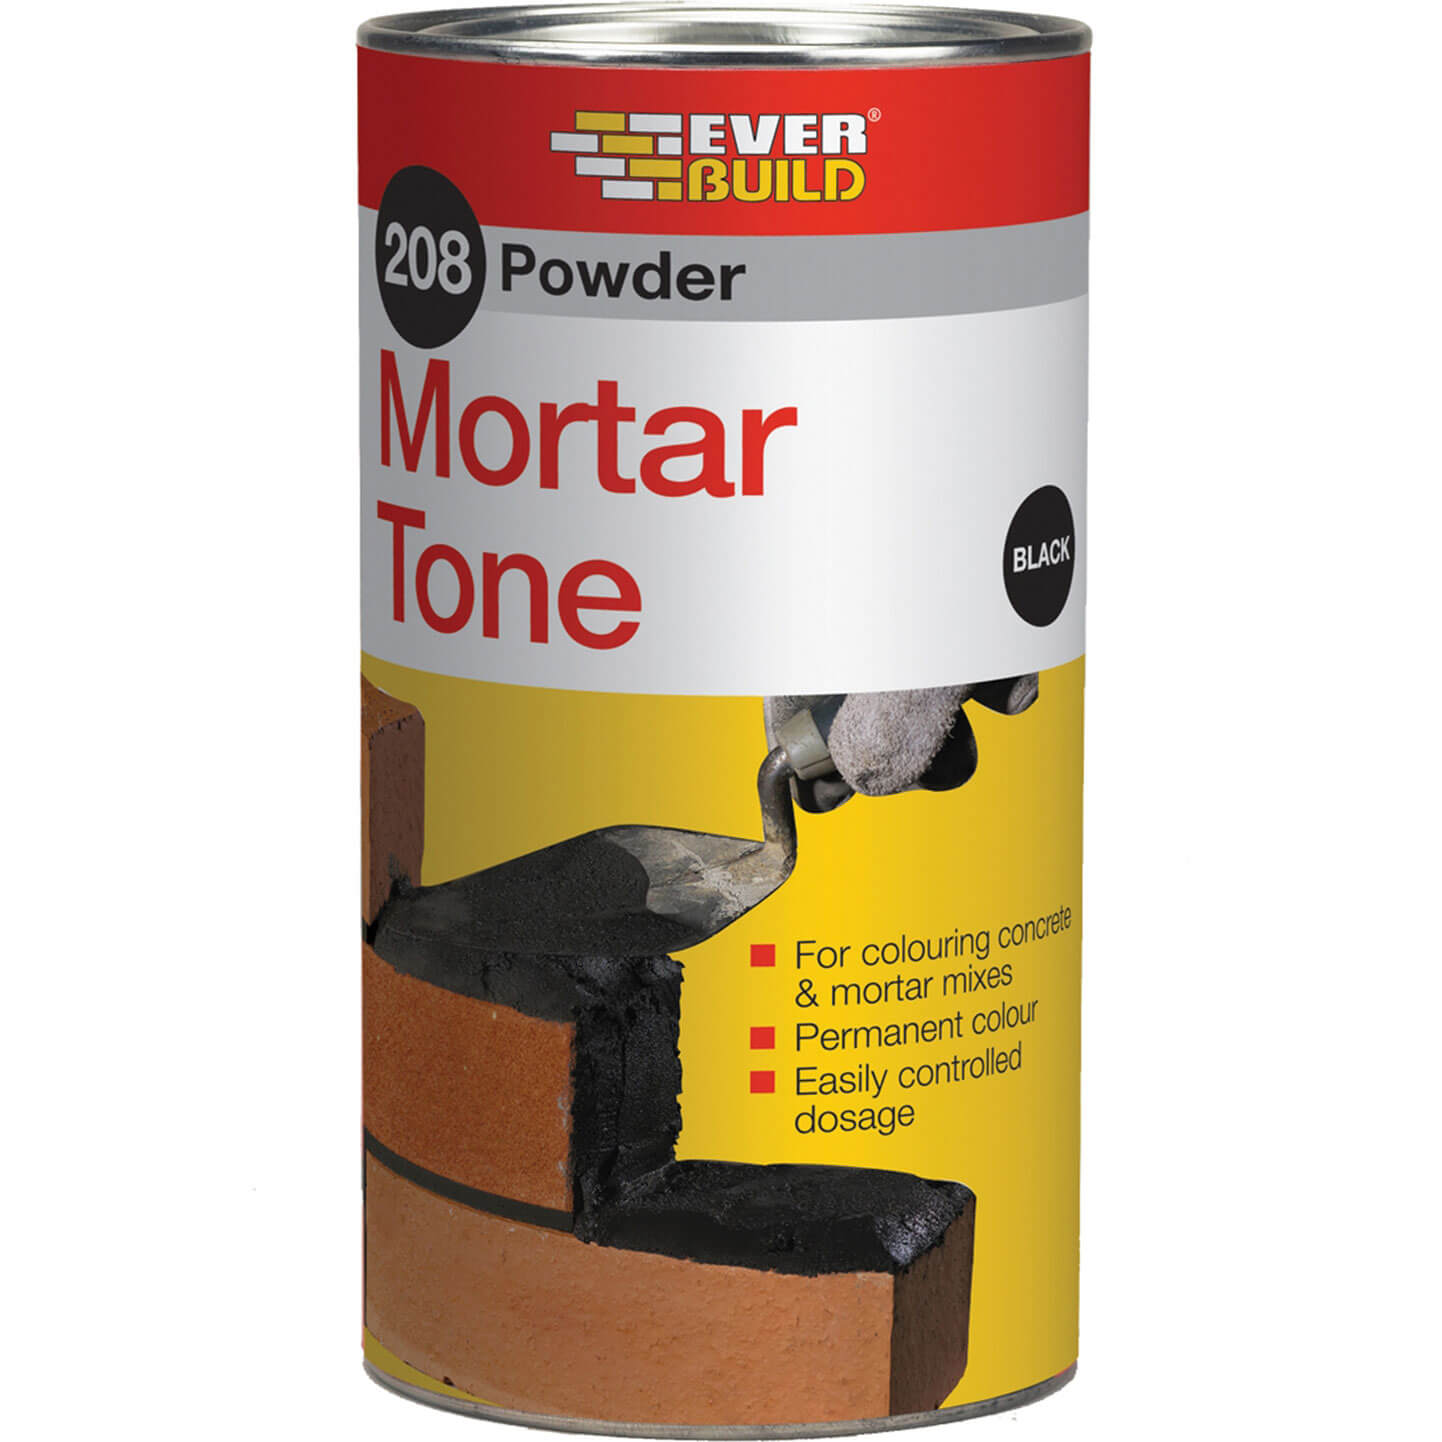 Everbuild Powder Mortar Tone Buff for Colouring Mortar 1kg